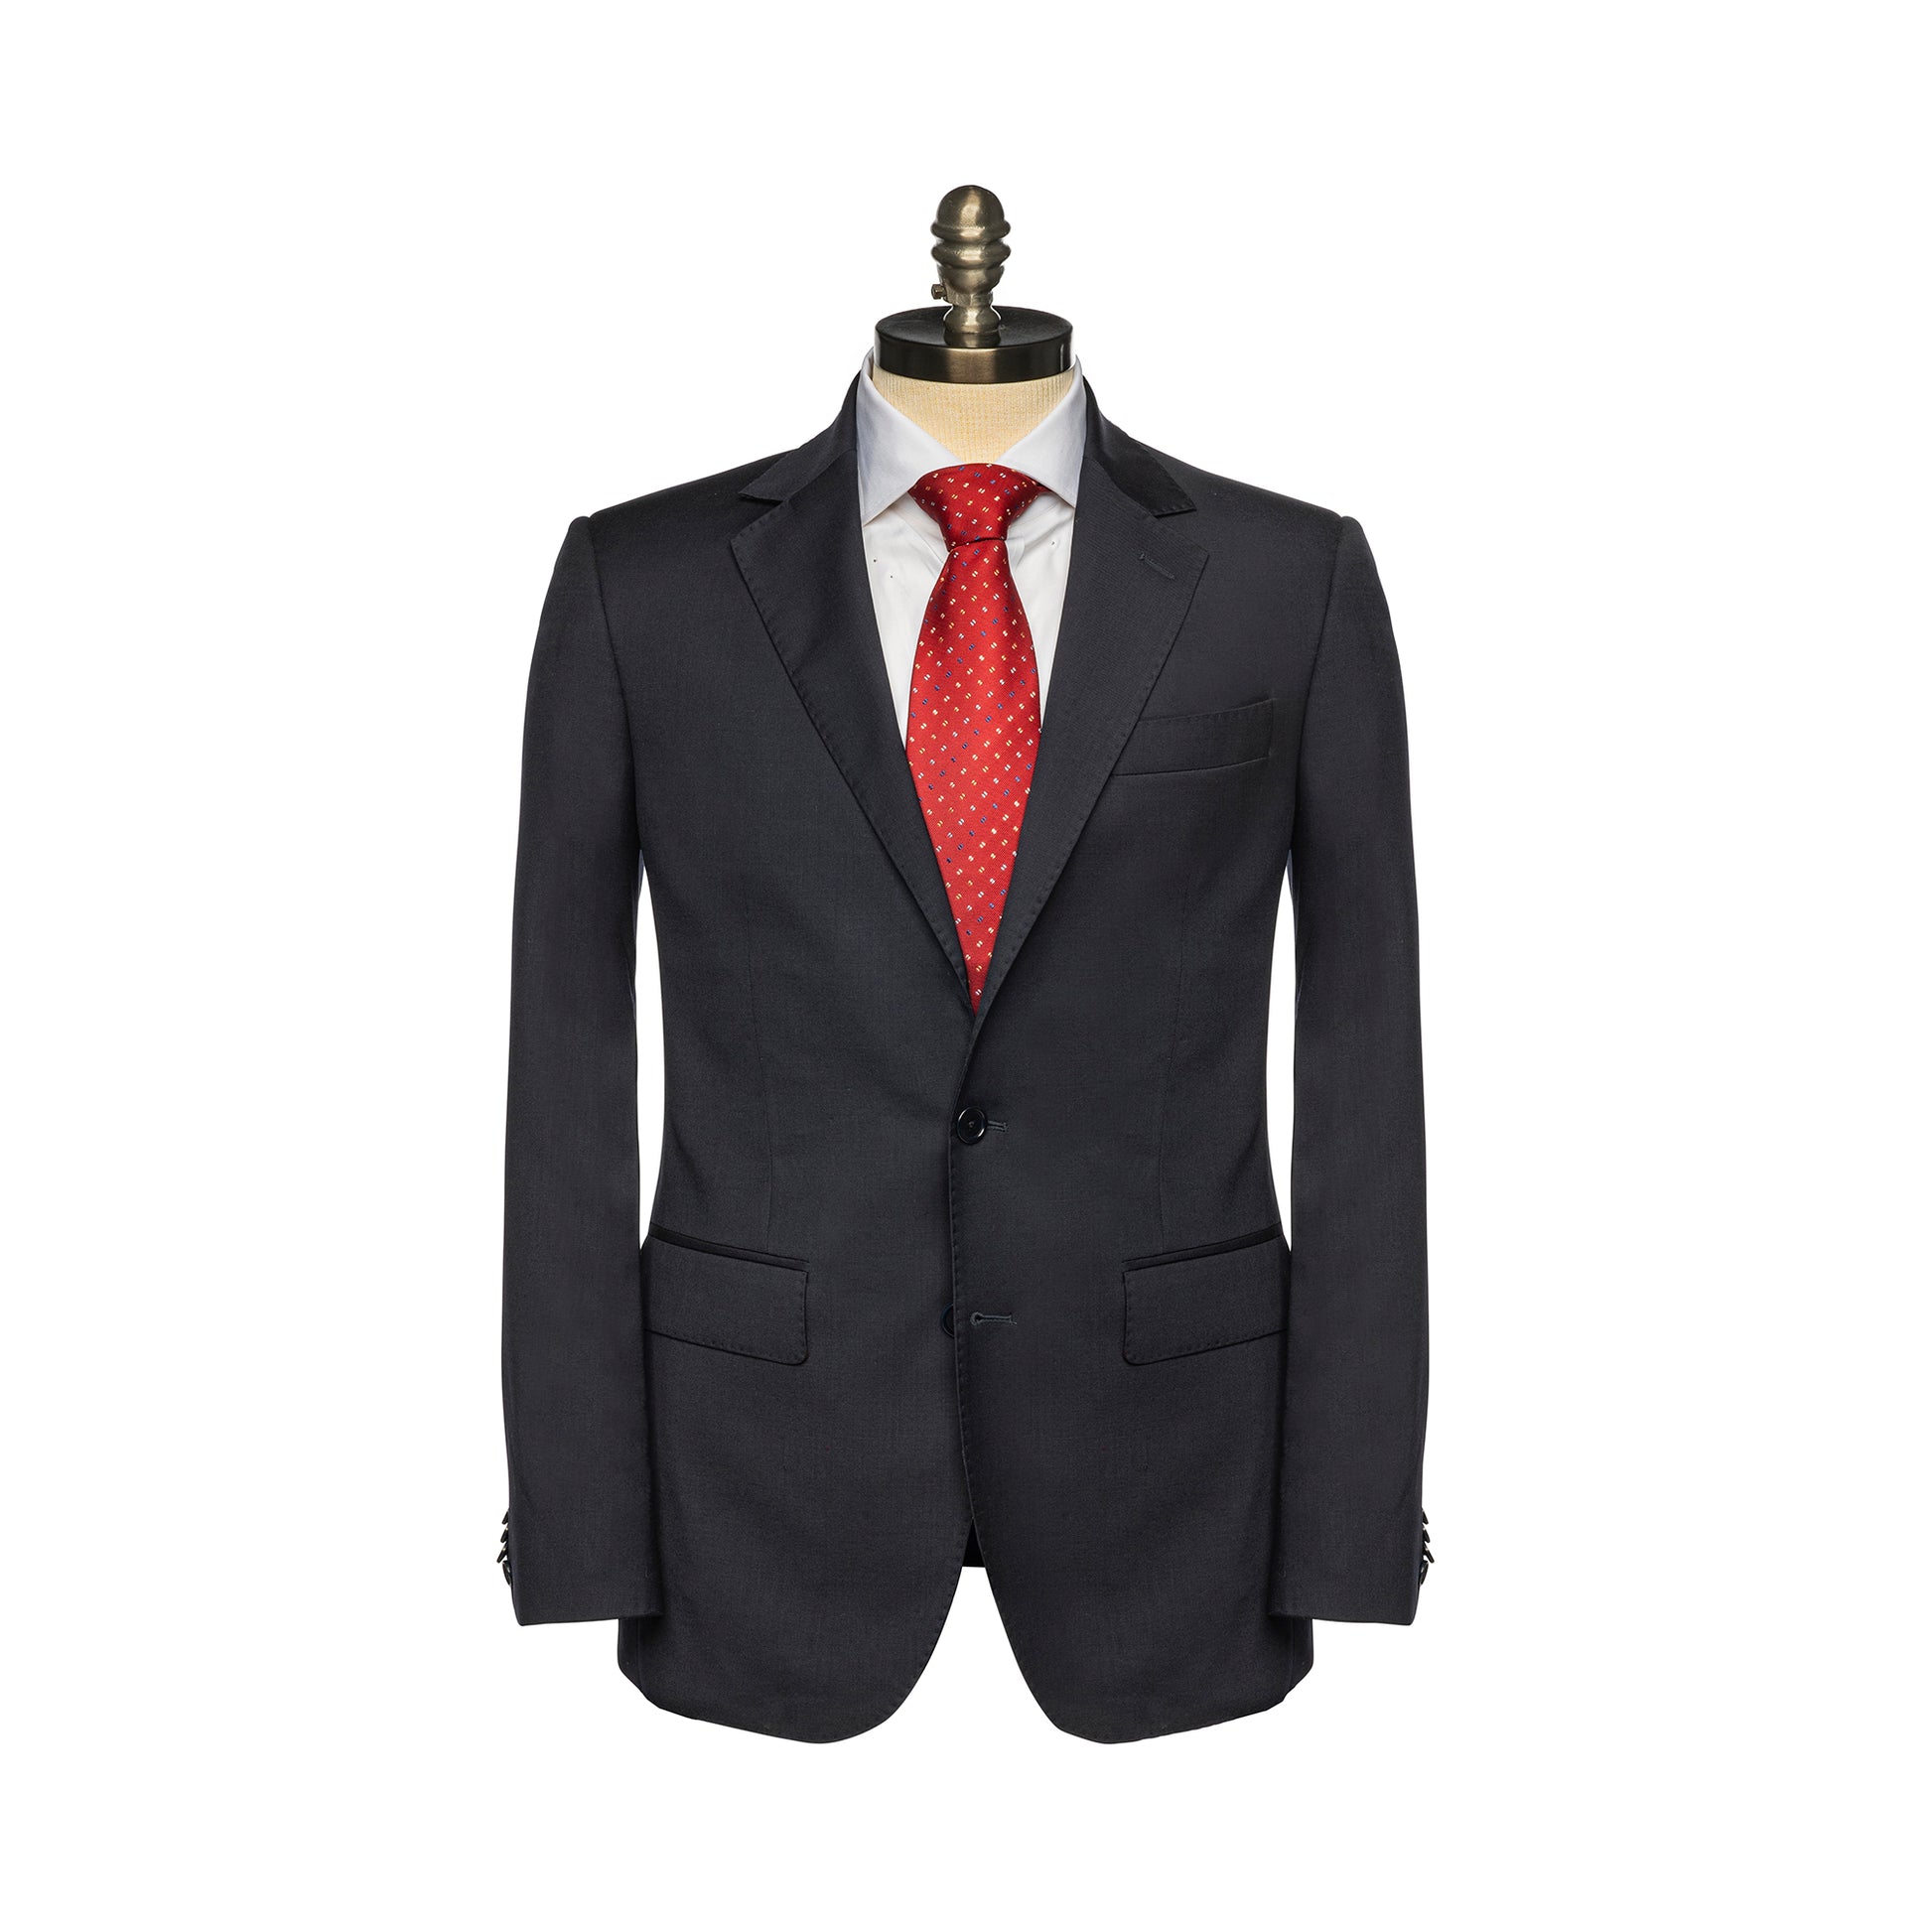 two pcs Suit for men in dark navy color